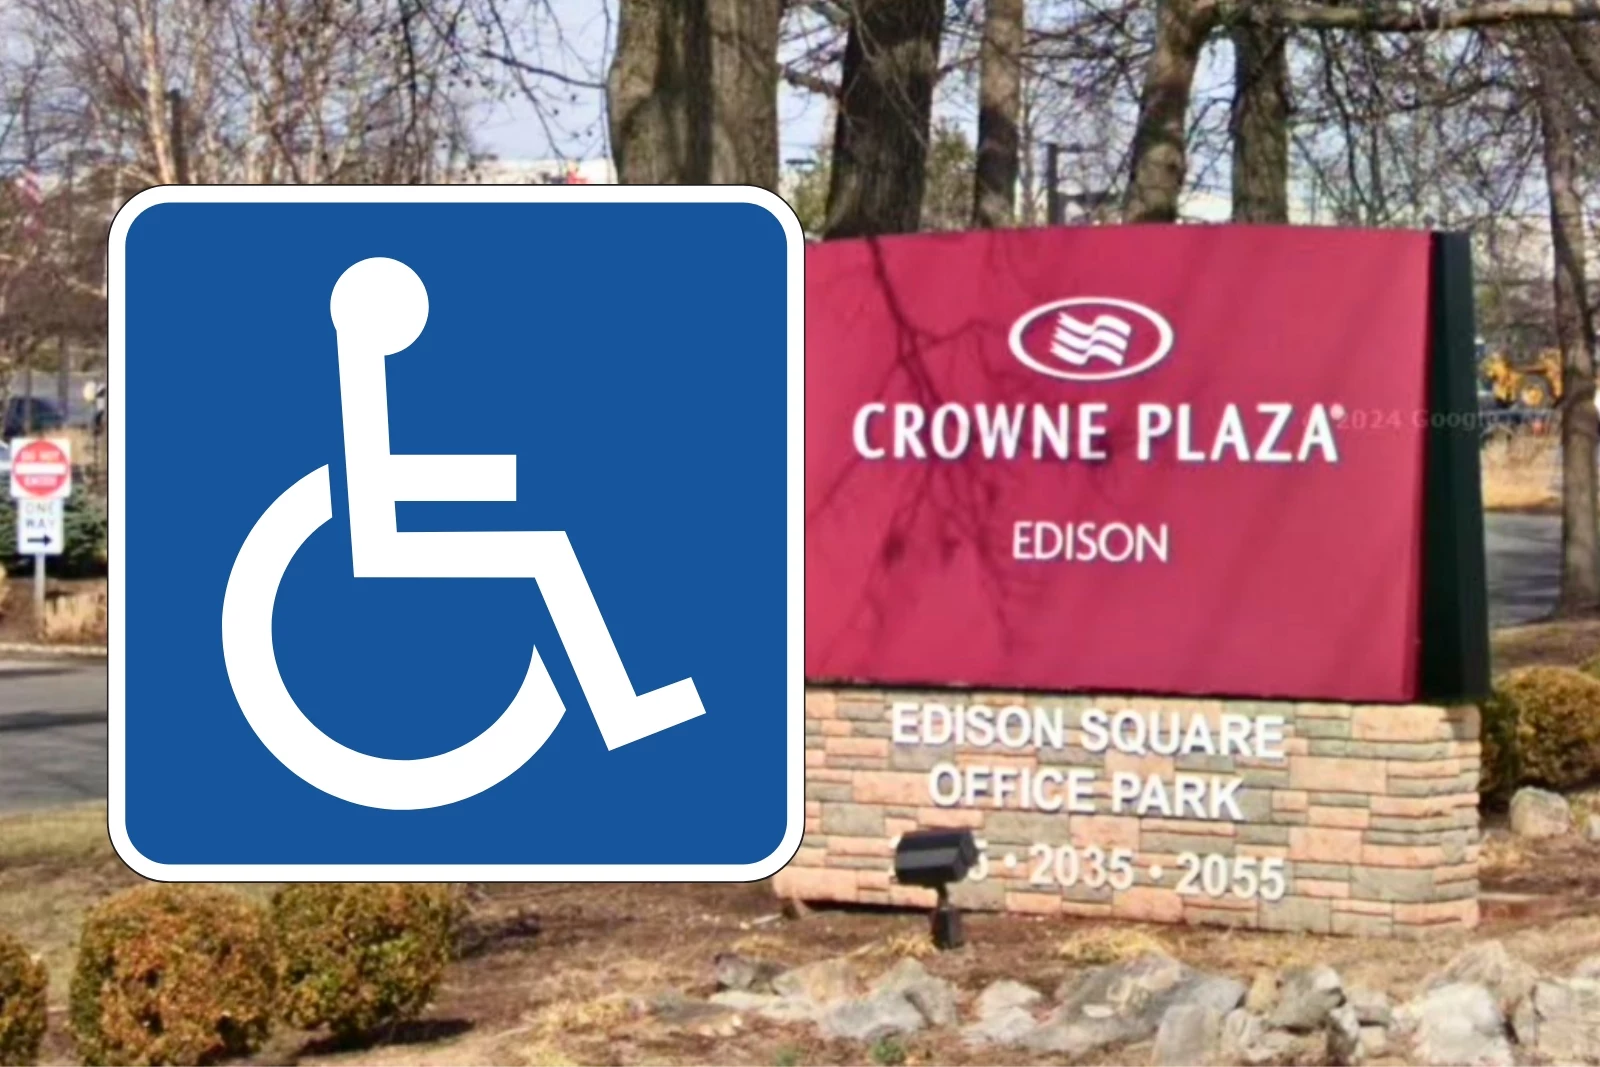 Crowne Plaza Edison entrance (Google Maps/Canva)